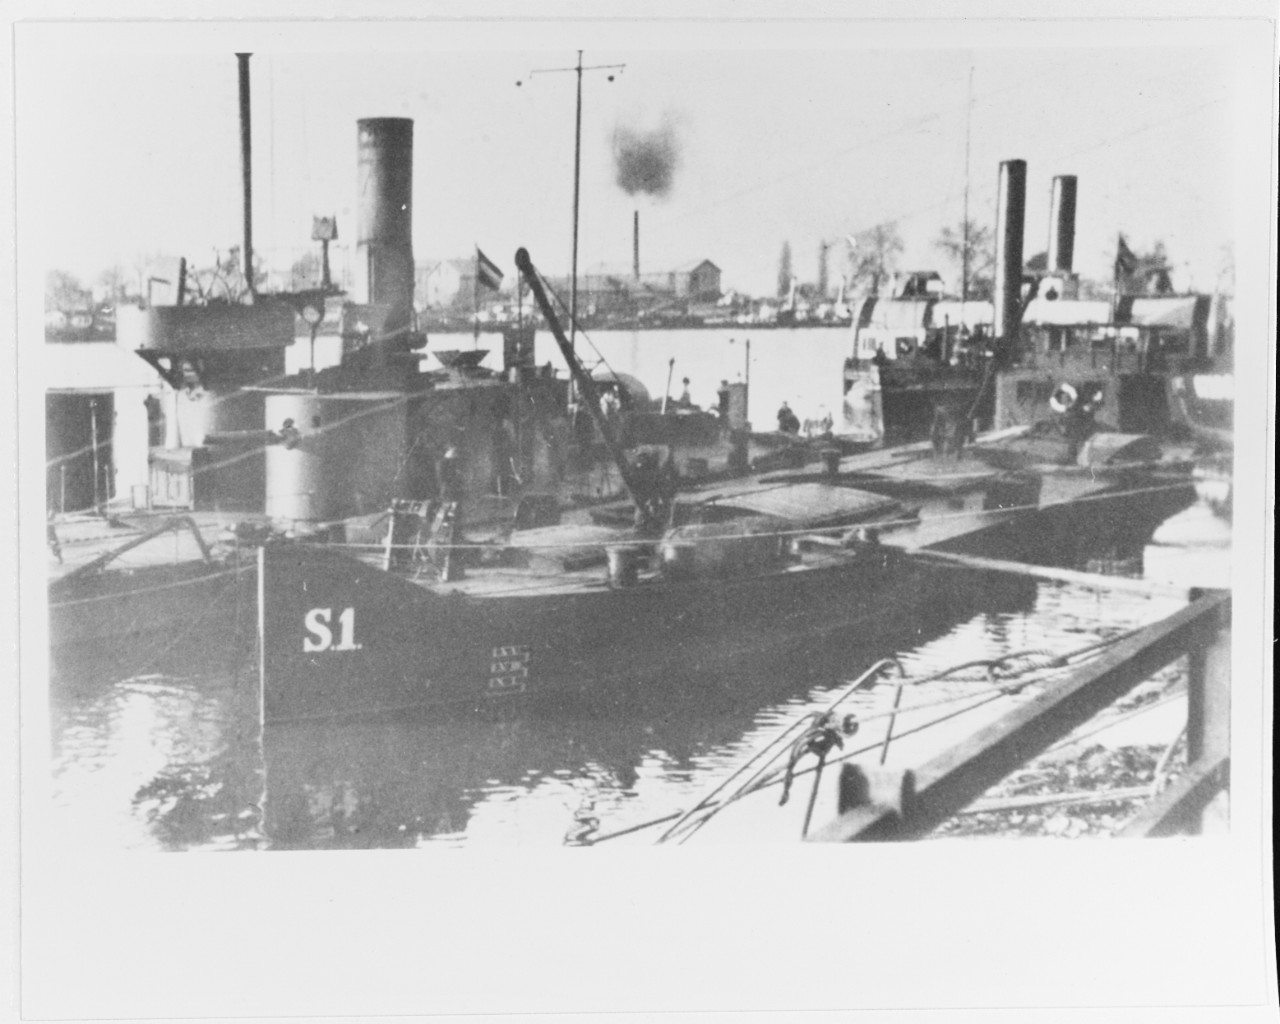 S.1. Austrian River Barge, 1914